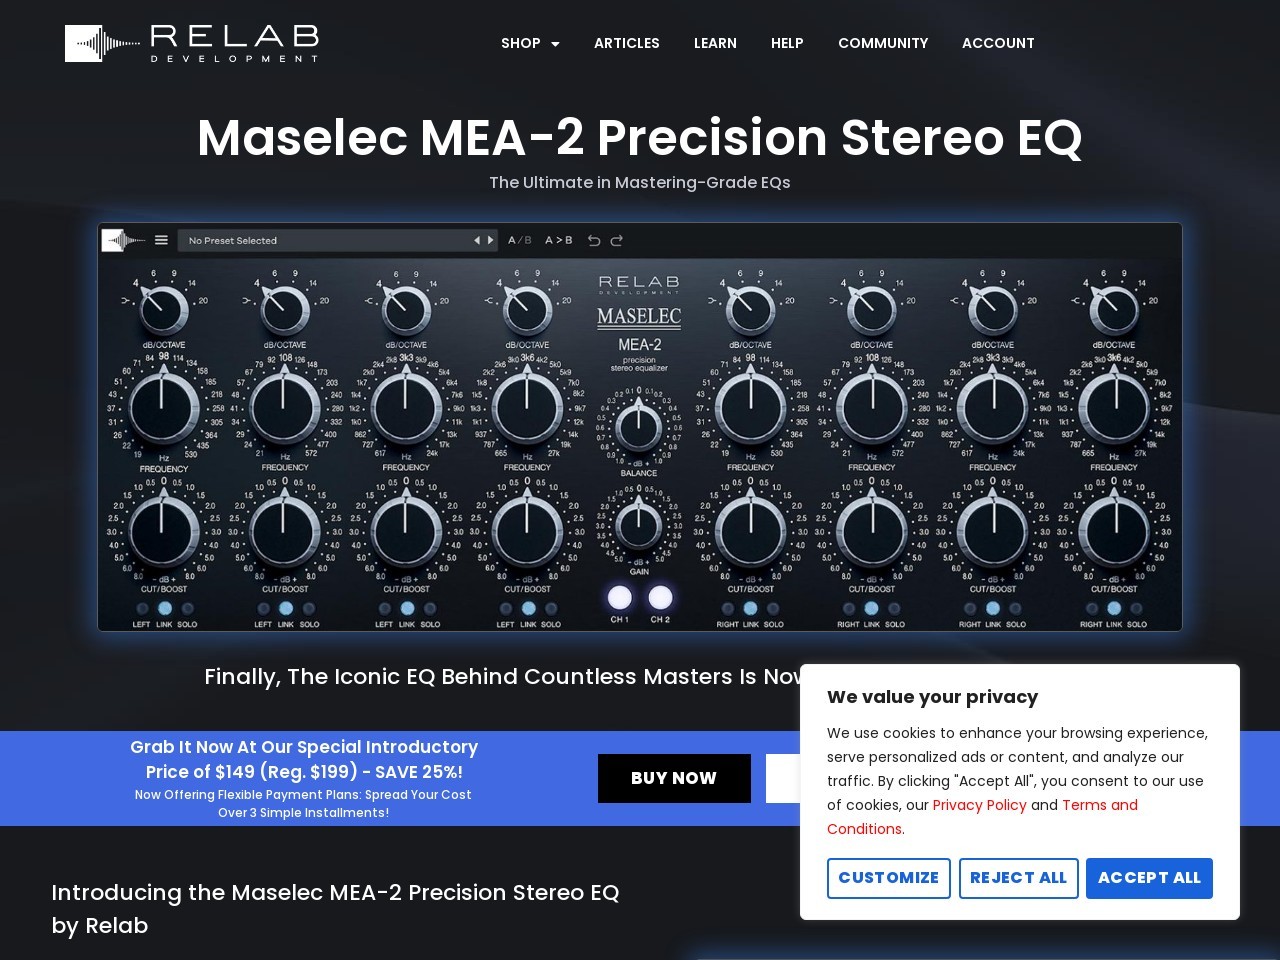 The Maselec MEA-2 Precision Stereo EQ By Relab